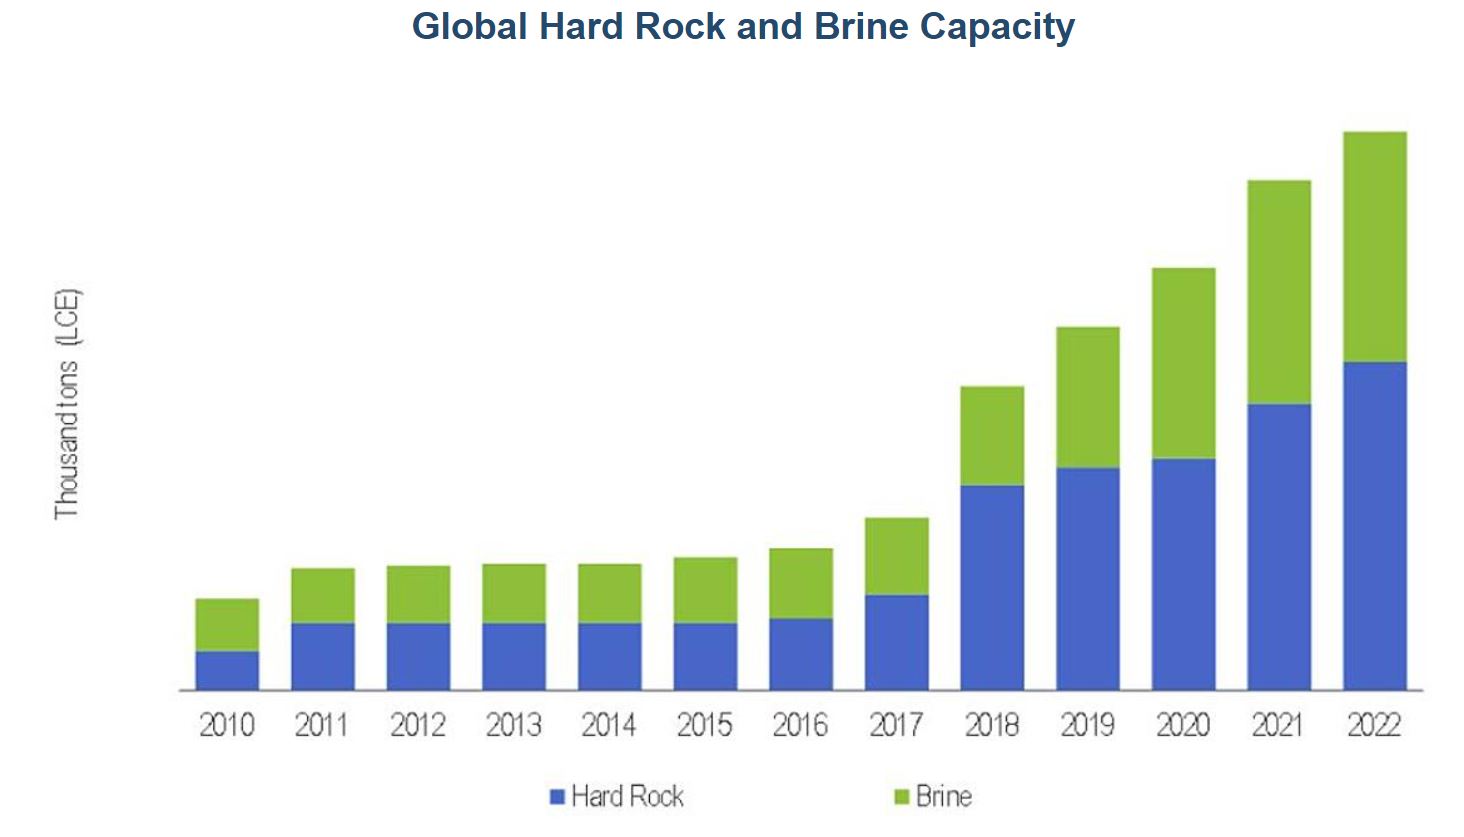 NexantECA - Global Hard Rock and Brine Capacity